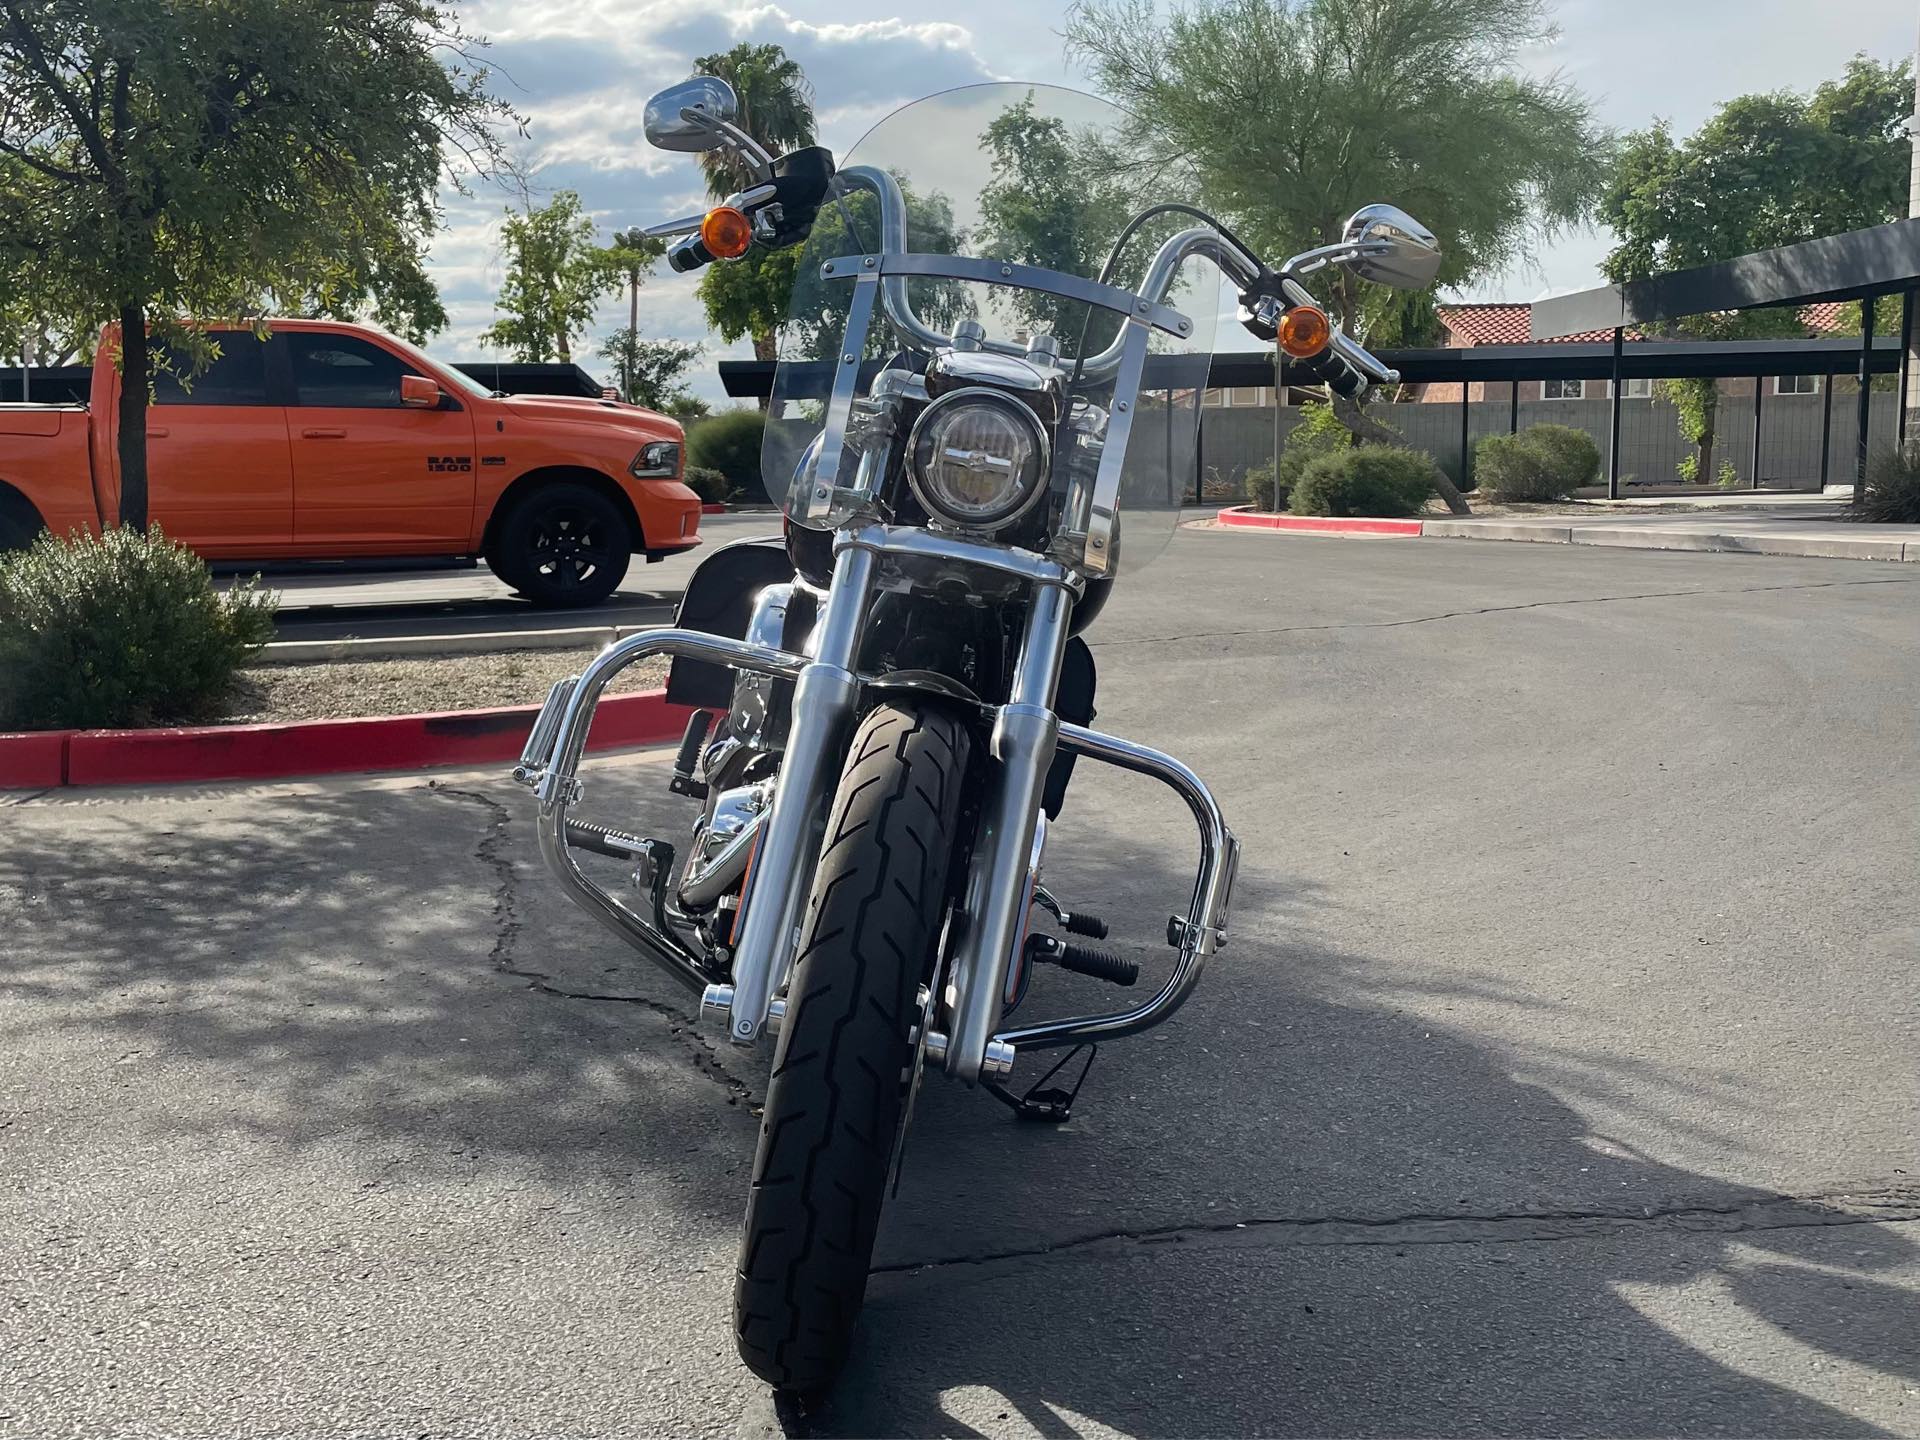 2018 Harley-Davidson Softail Low Rider at Buddy Stubbs Arizona Harley-Davidson